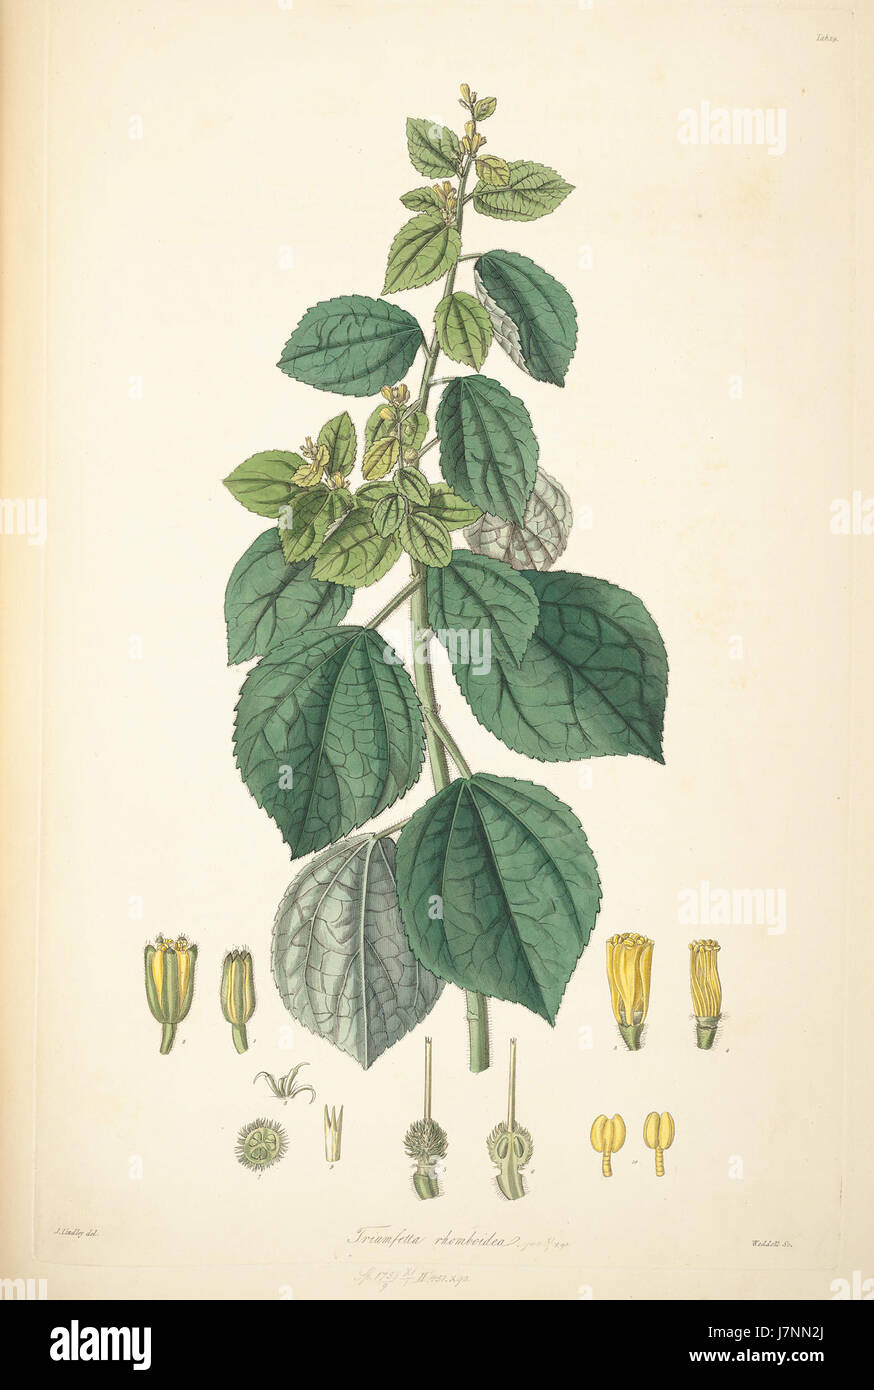 29 Triumfetta rhomboidea   John Lindley   Collectanea botanica (1821) Stock Photo